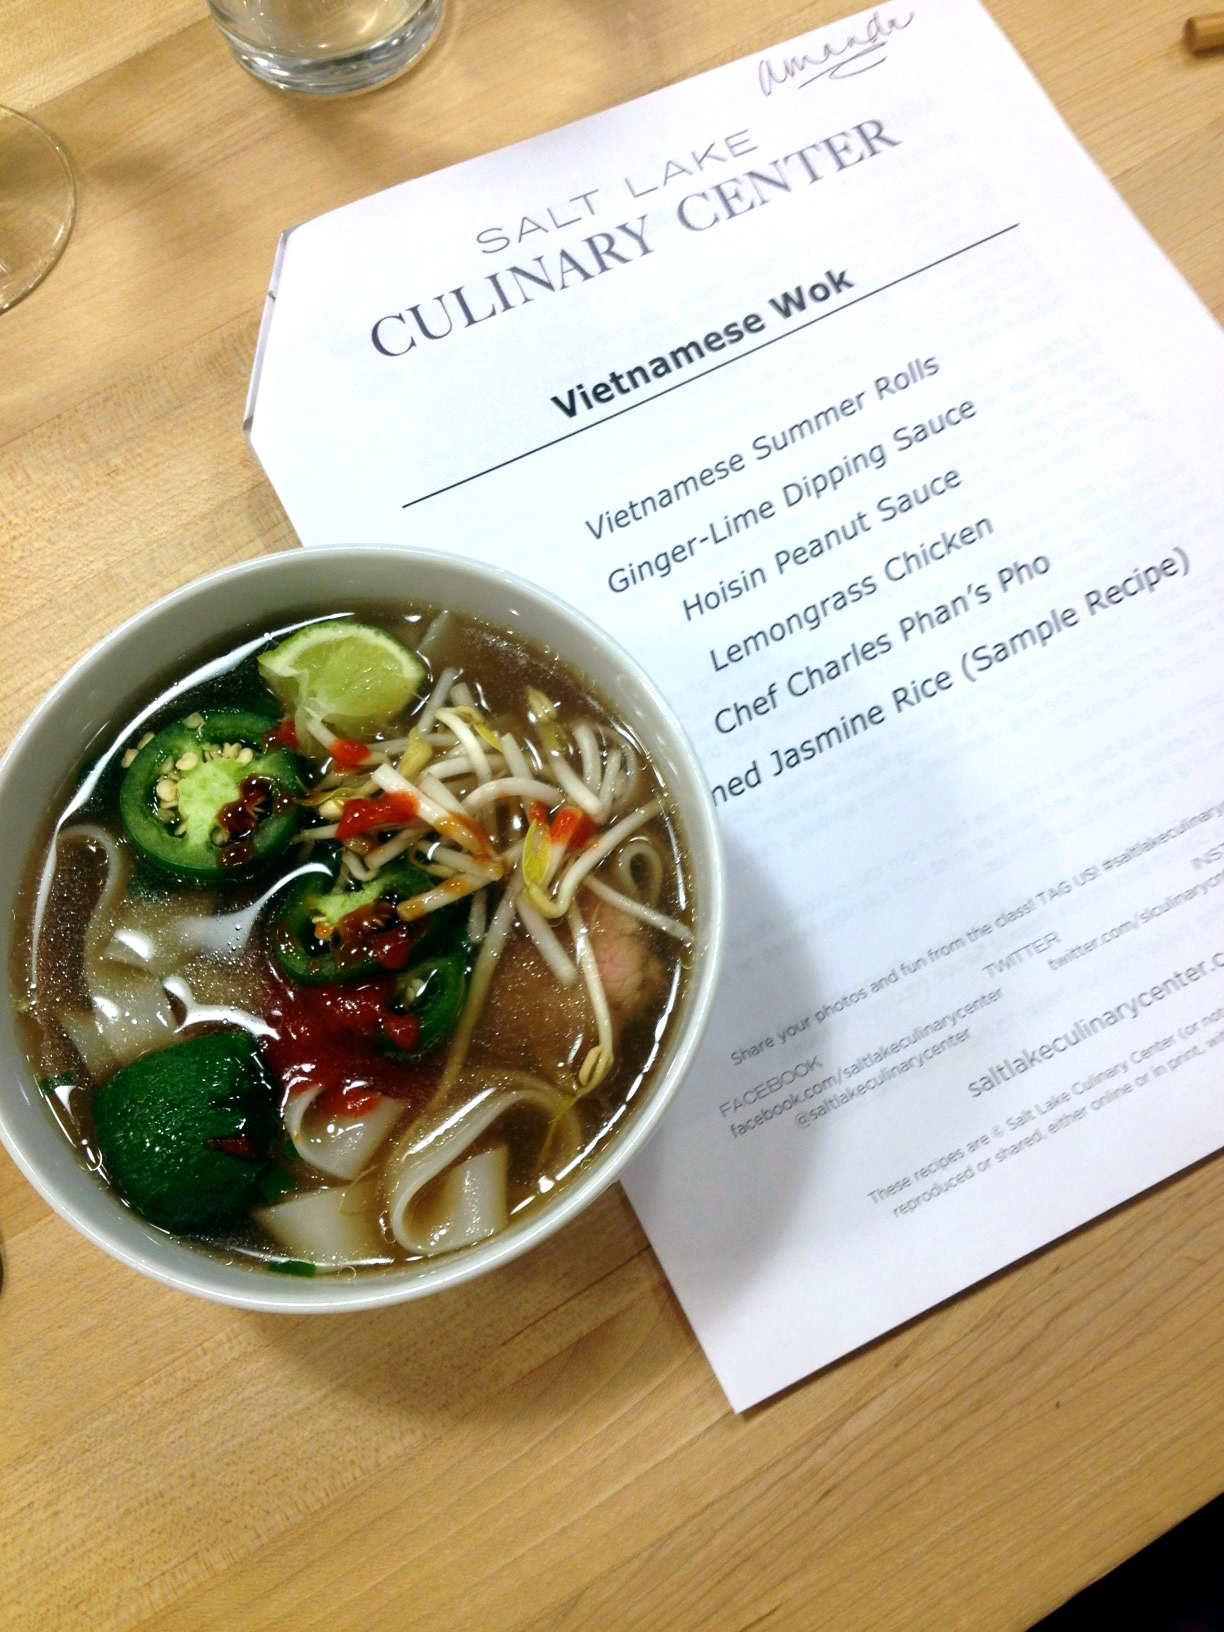 Salt Lake Culinary Center – Vietnamese Wok